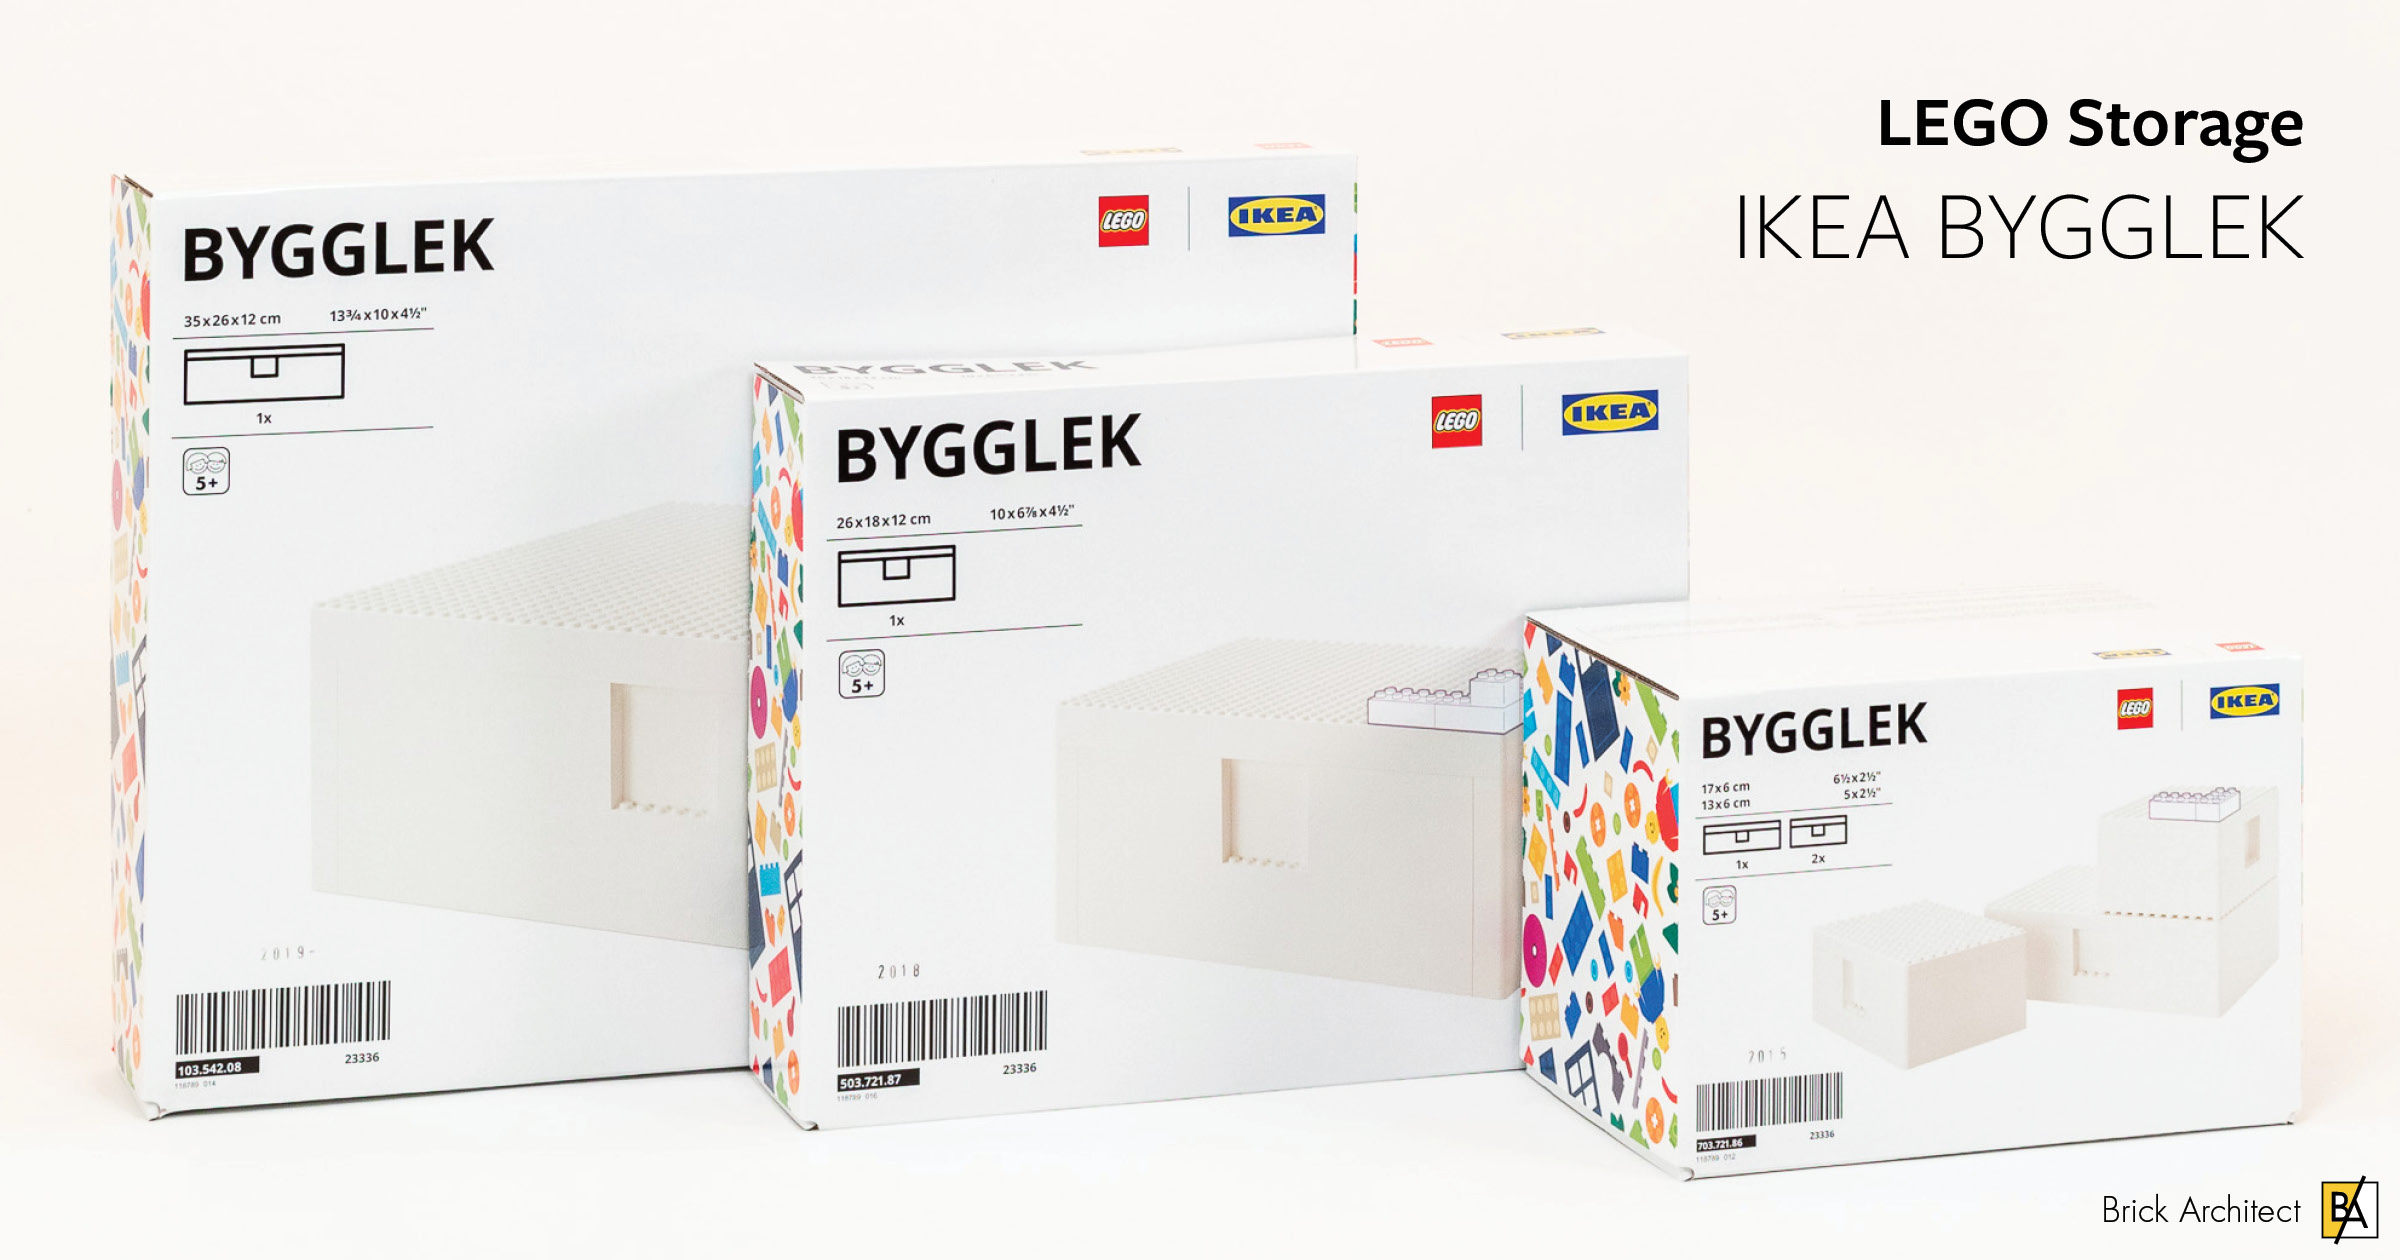 IKEA BYGGLEK - ARCHITECT